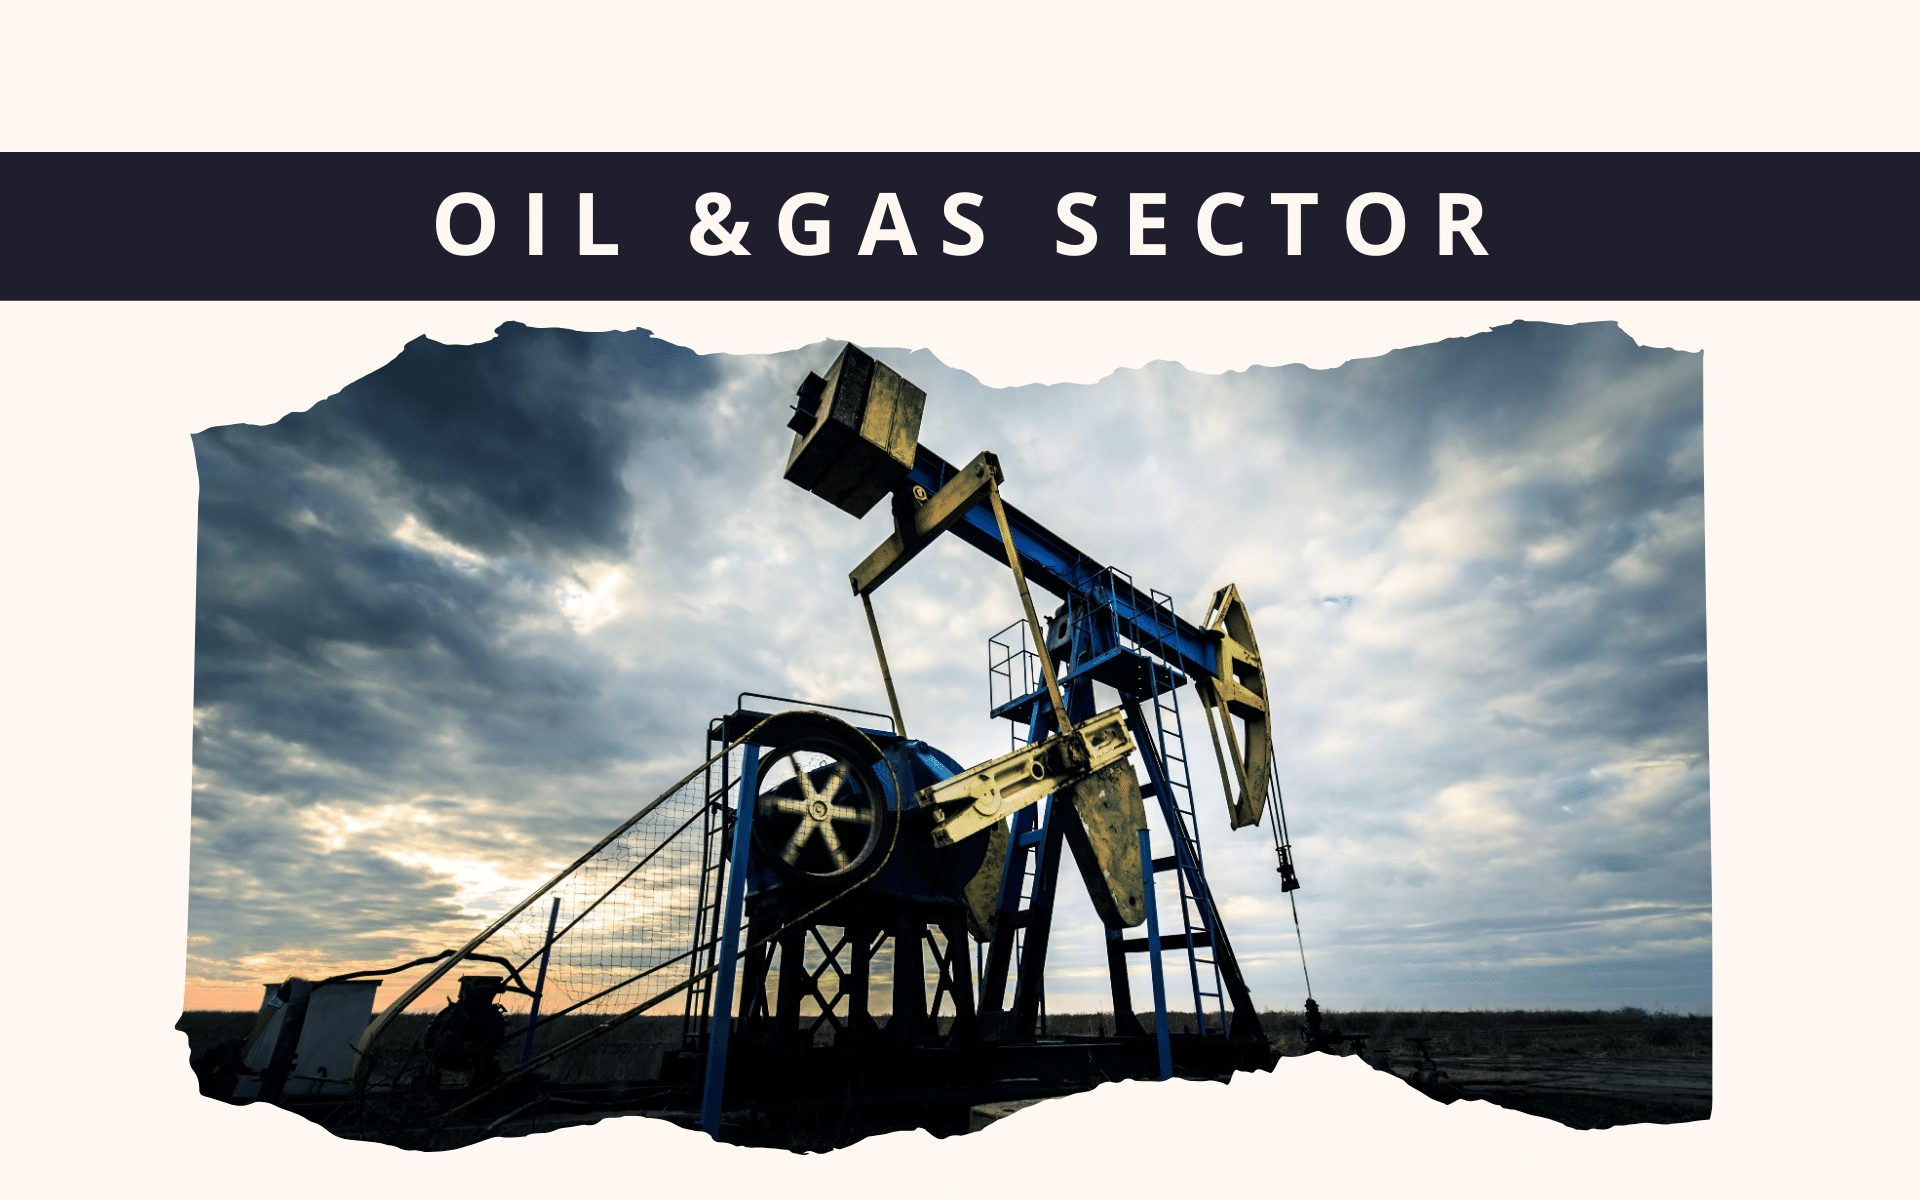 OGRA - Oil & Gas Sector